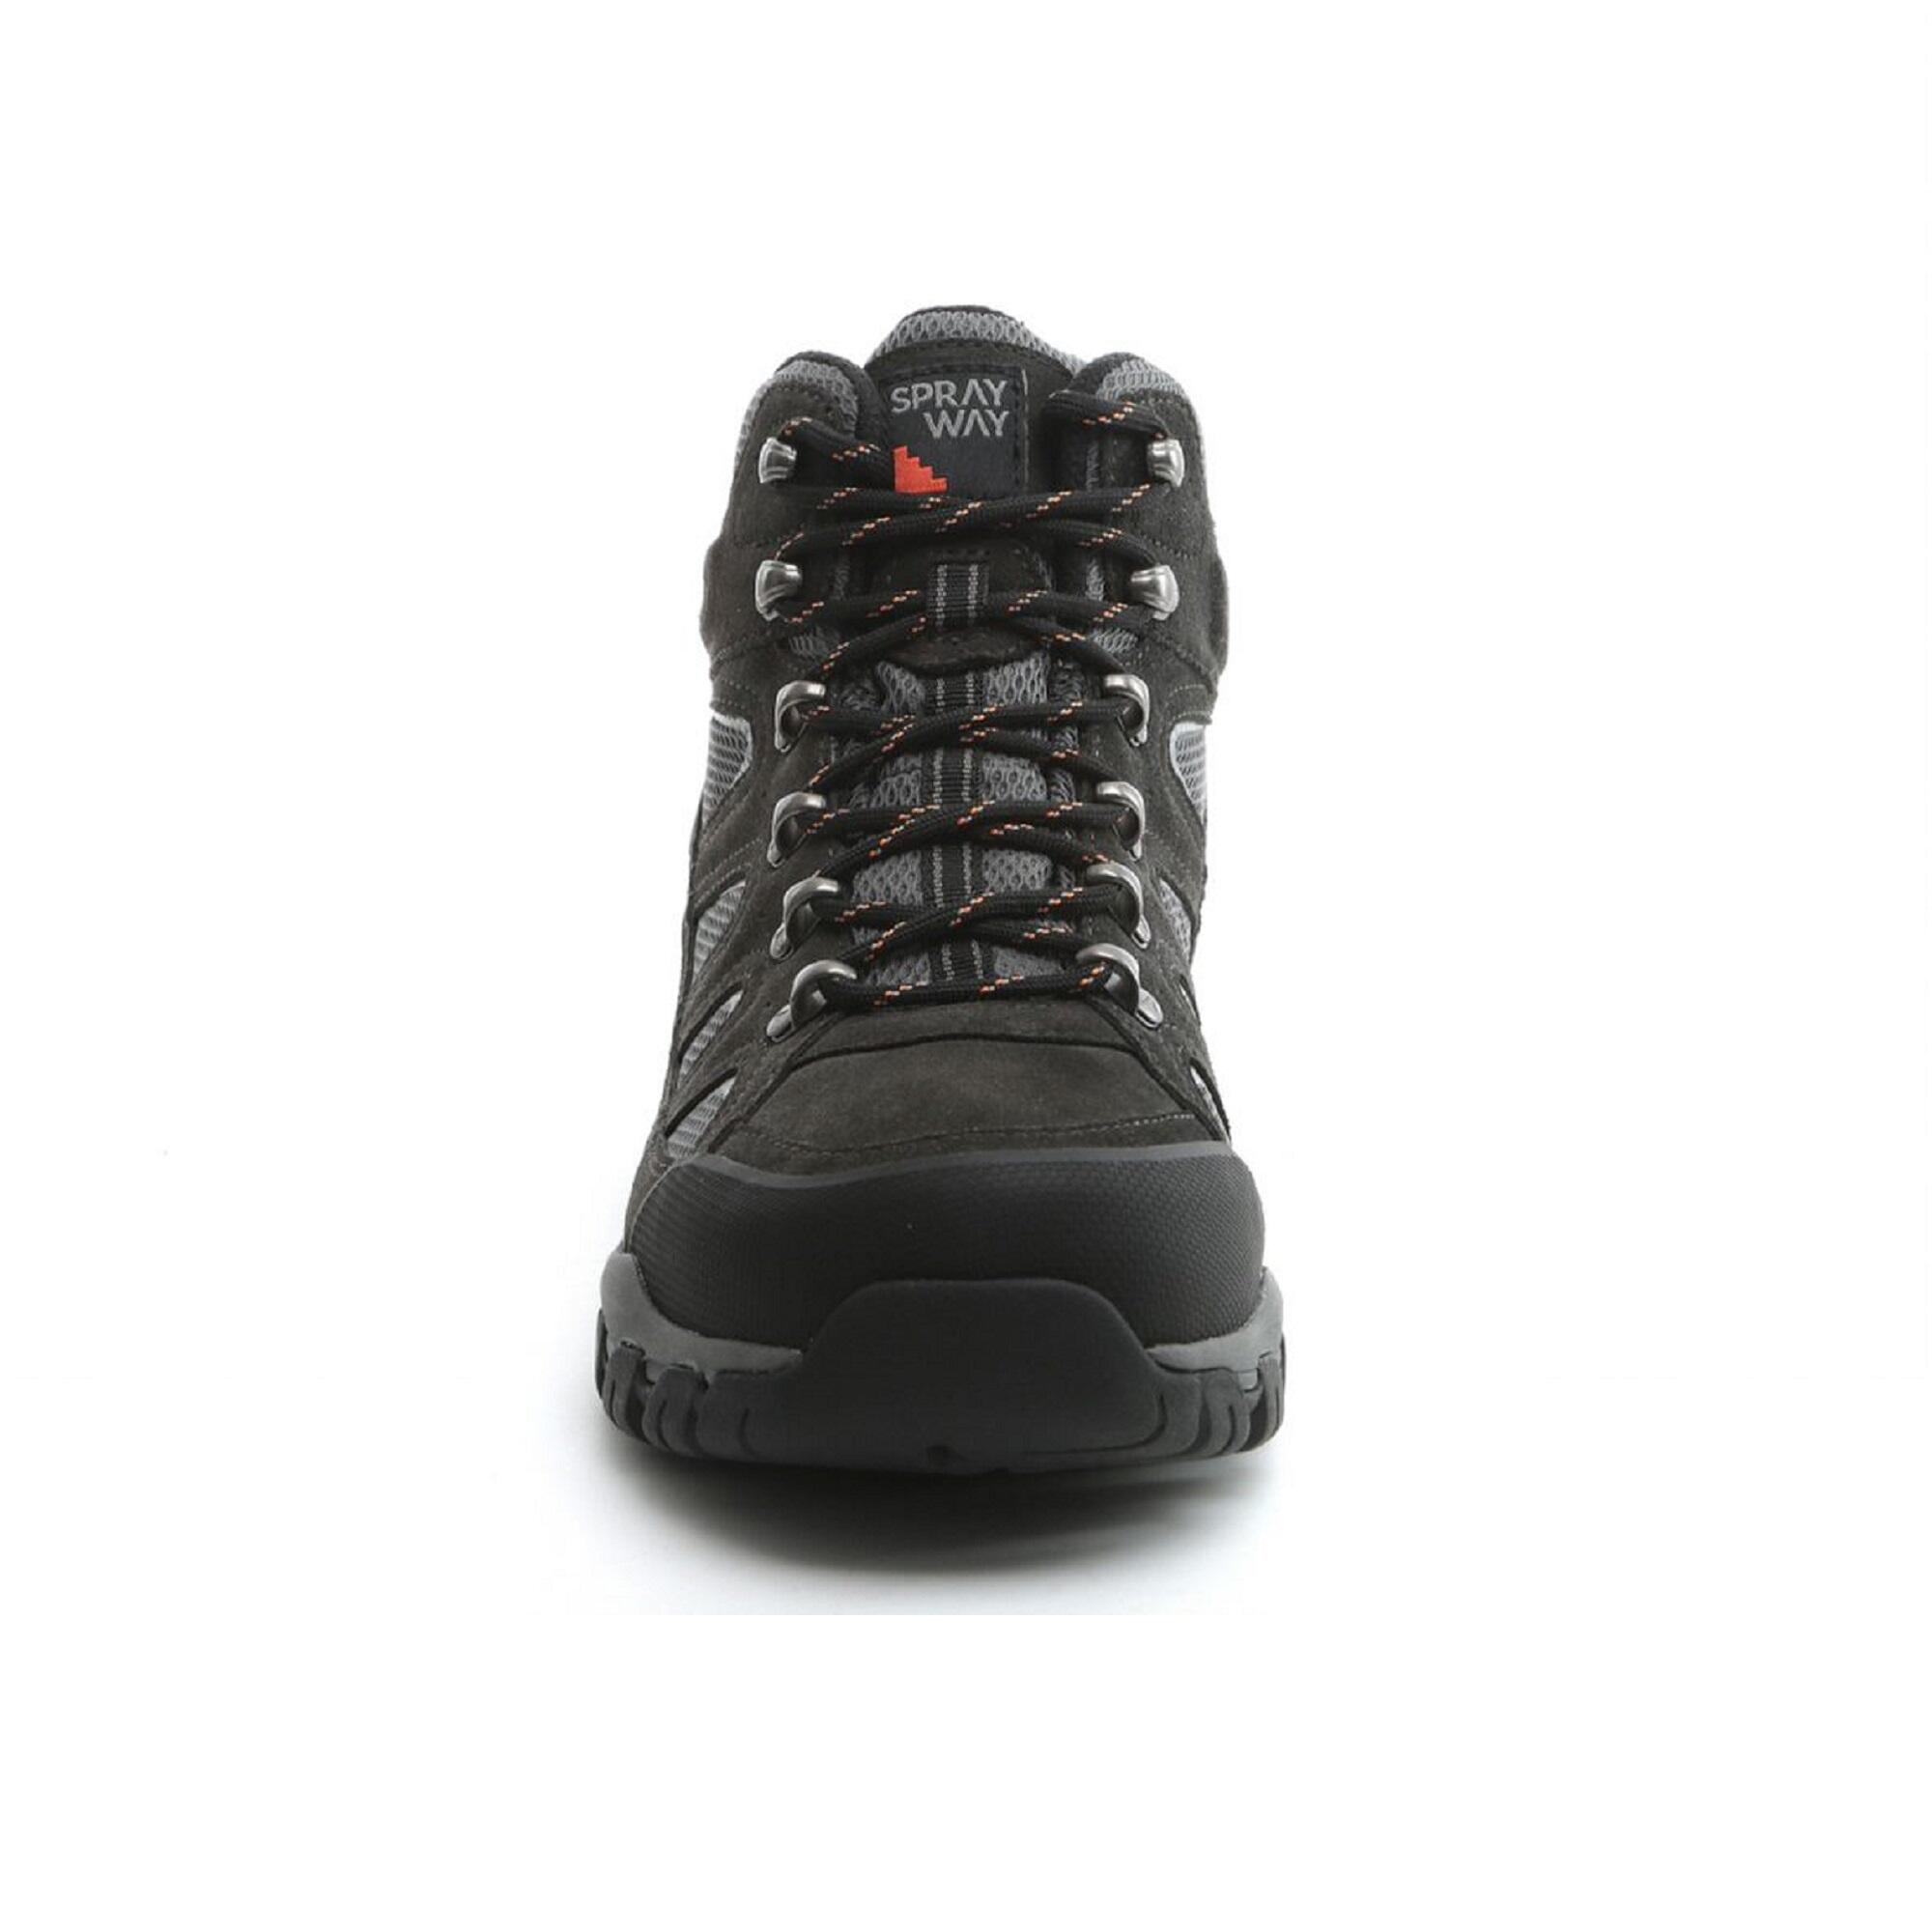 Men's waterproof walking boots - Sprayway Mull mid - Black 2/6